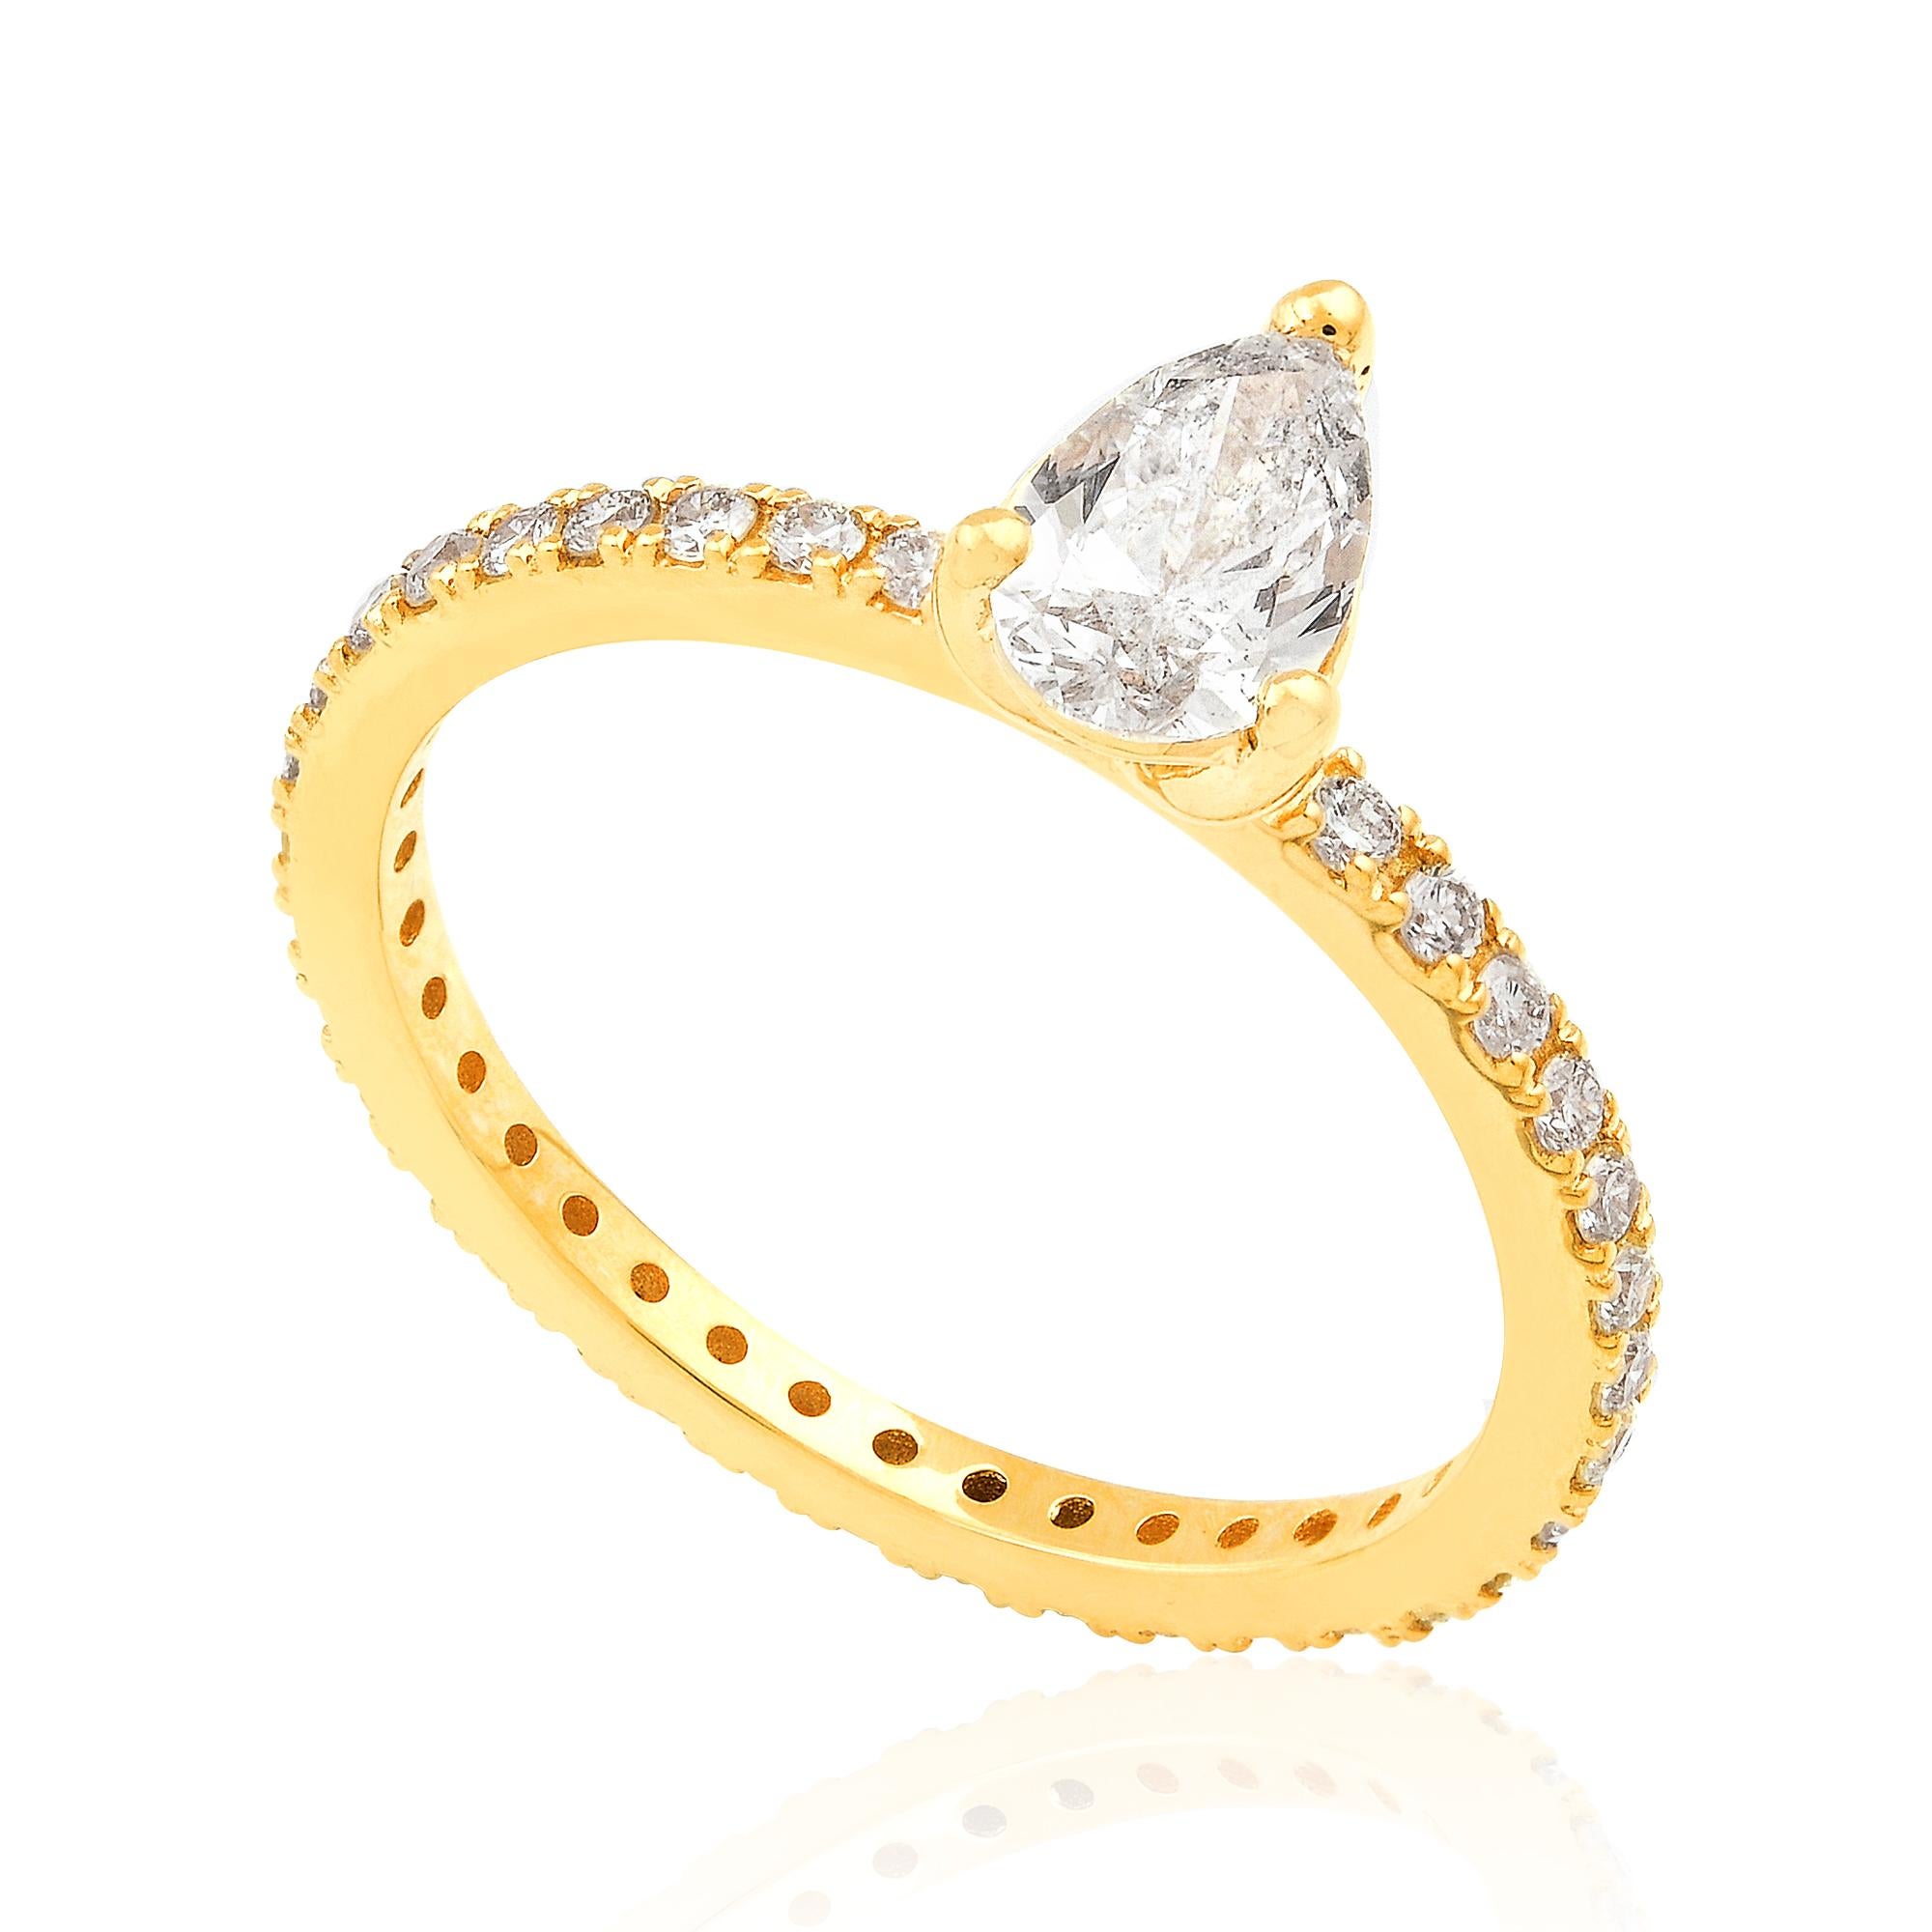 For Sale:  0.91 Carat Pear Diamond Band Ring Solid 14 Karat Yellow Gold Handmade Jewelry 3